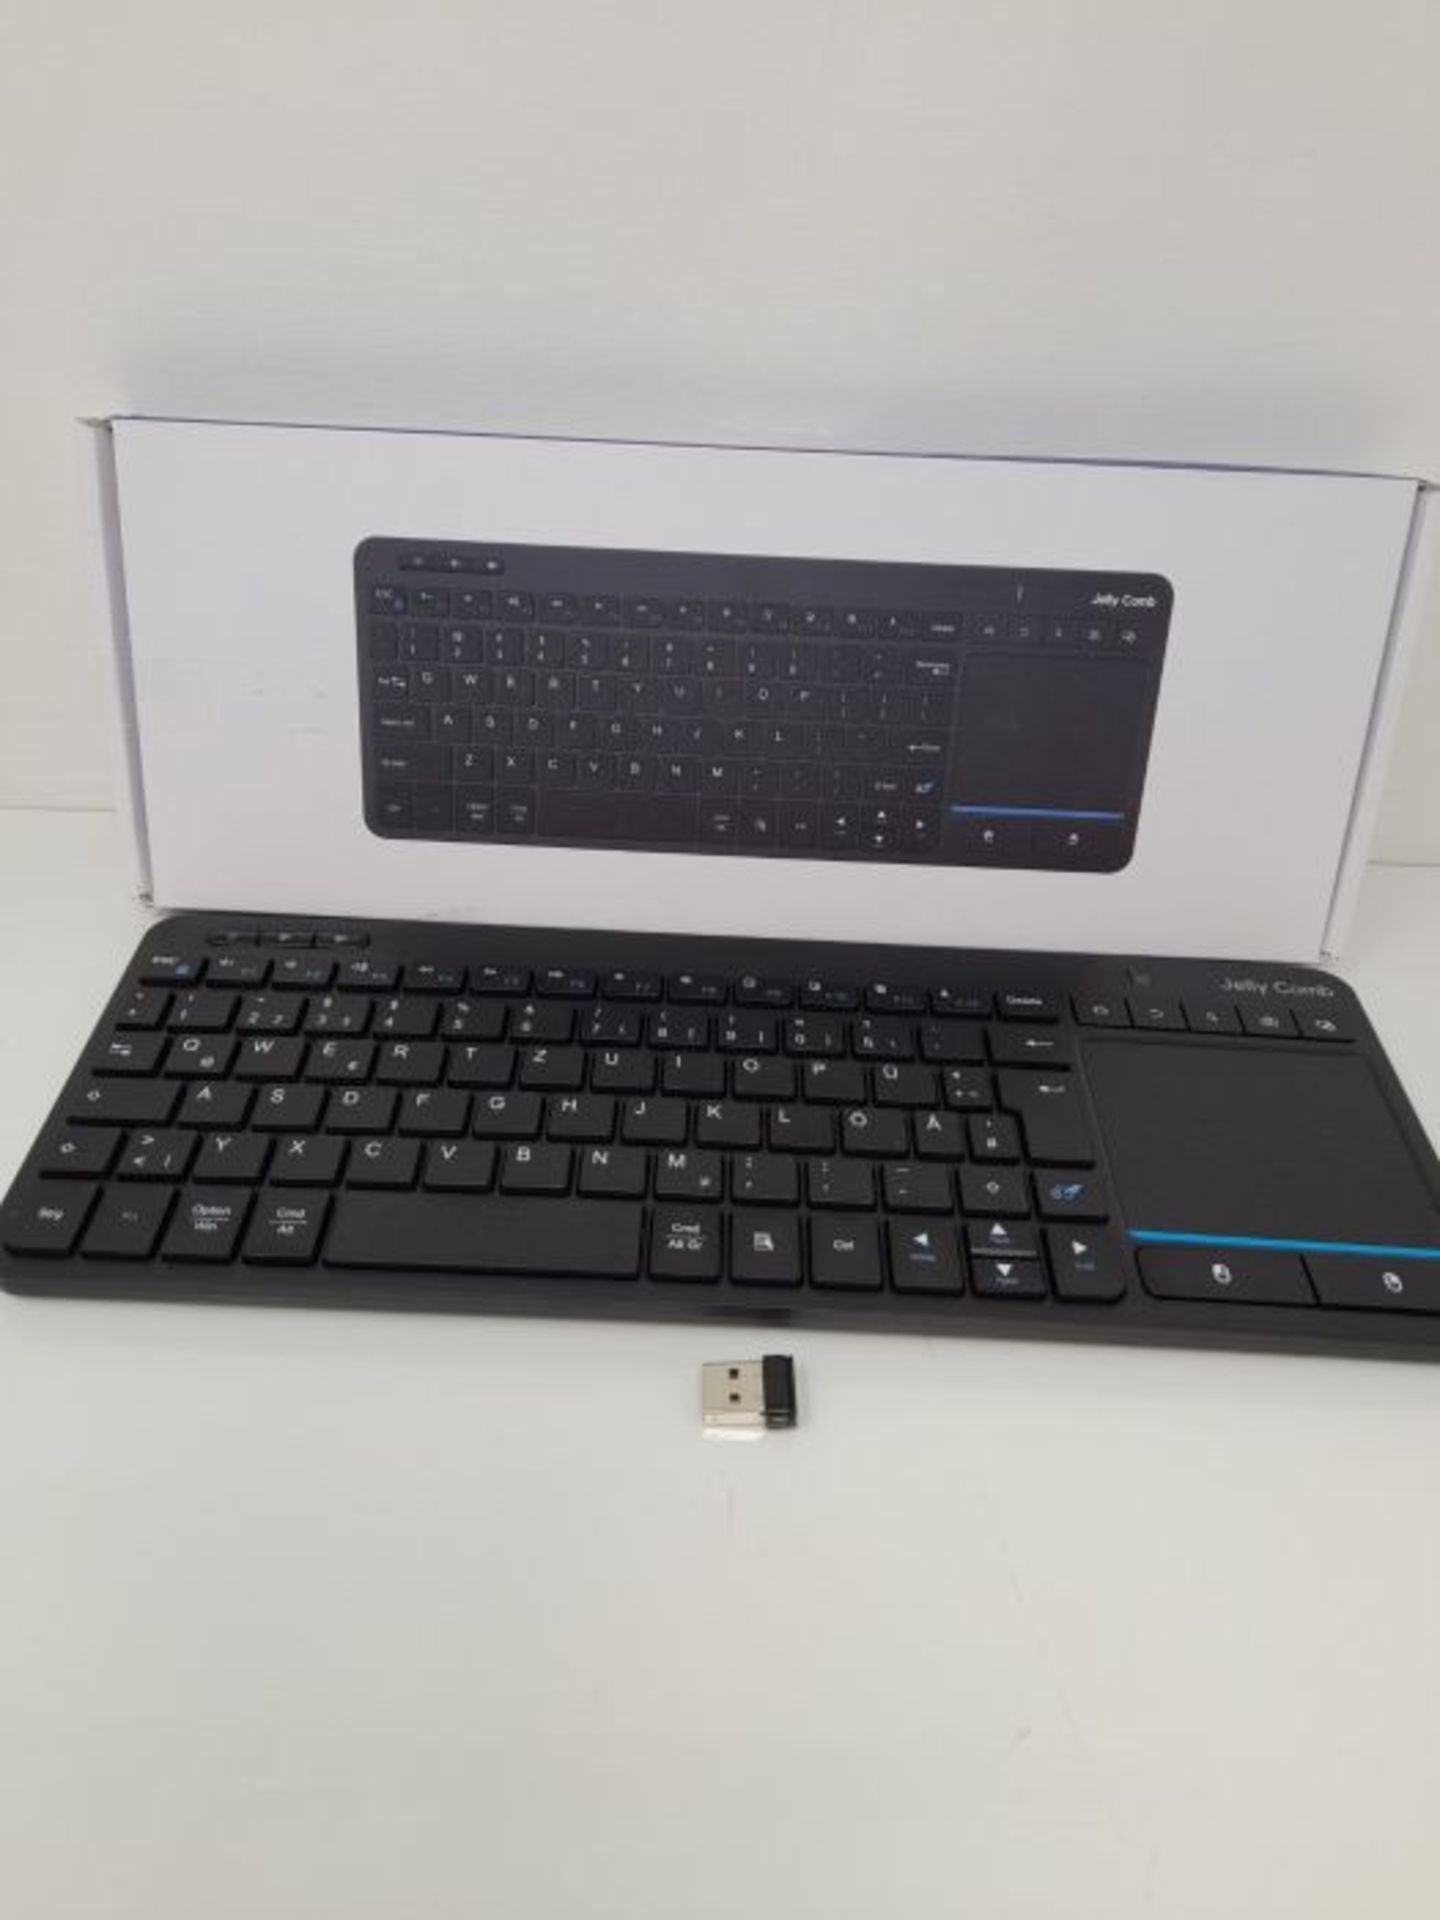 Dual Bluetooth + 2.4G Wireless Keyboard with Touchpad, Wireless QWERTZ Keyboard with G - Image 3 of 3